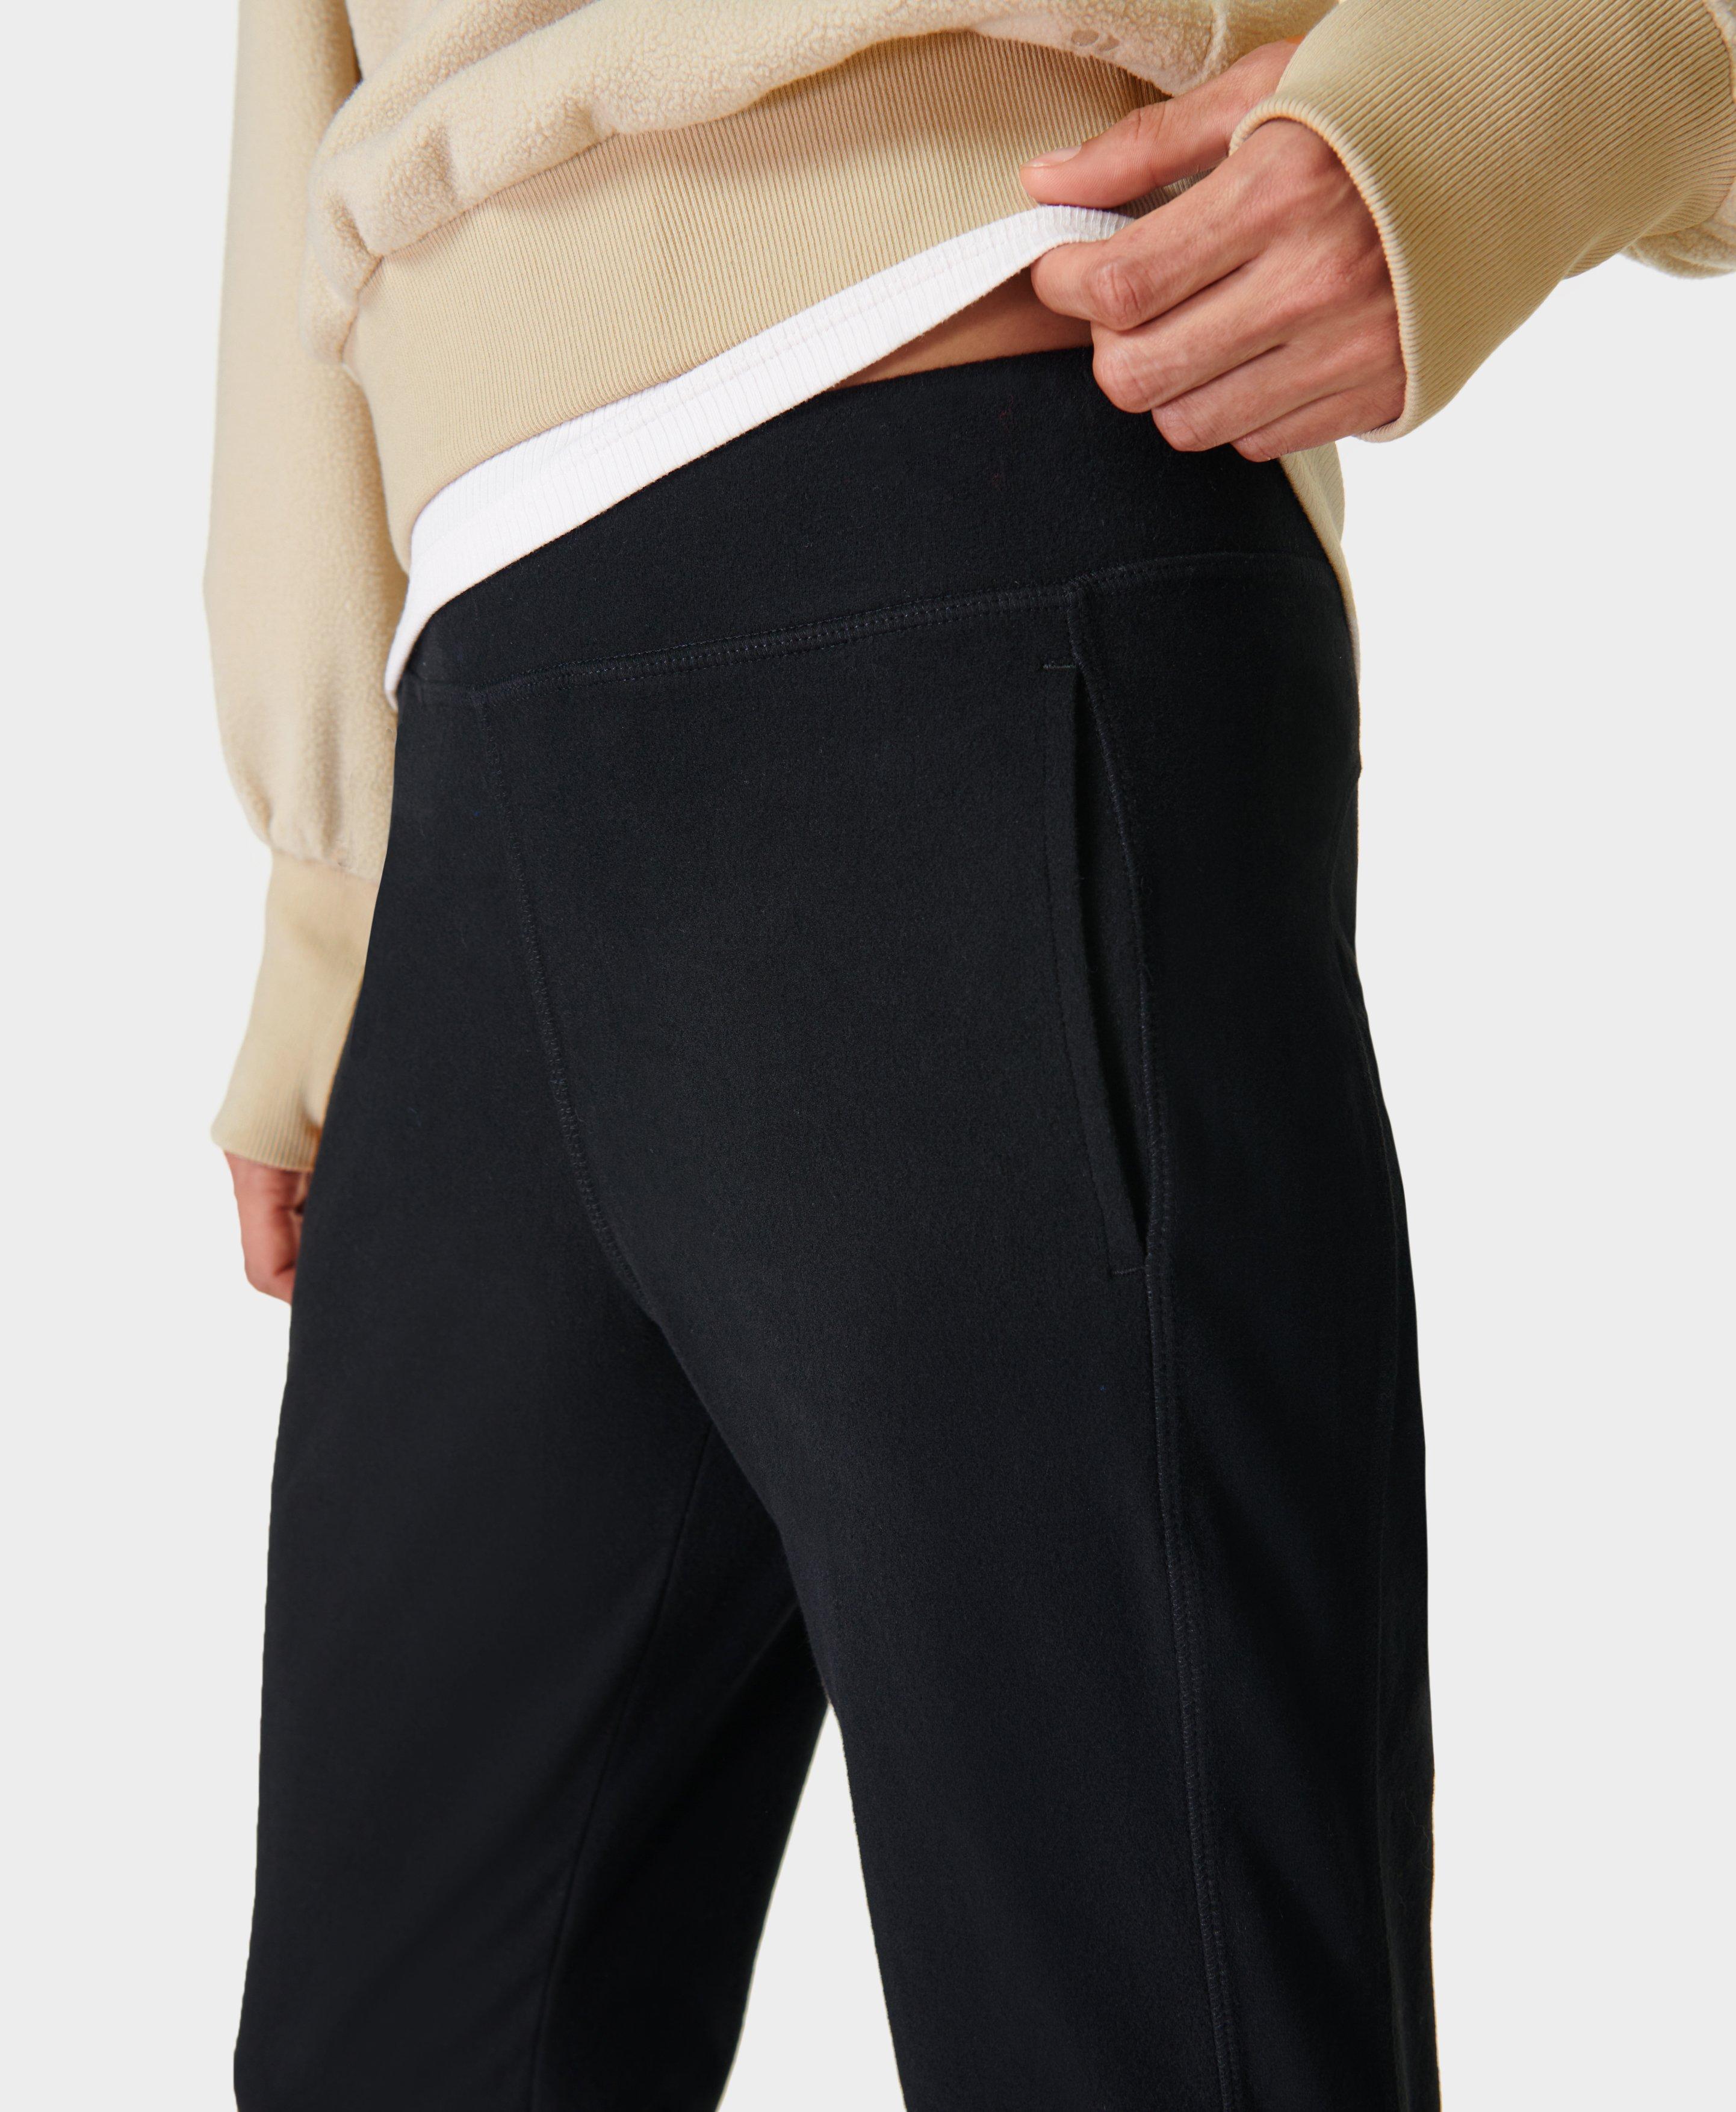 Sweaty Betty Gary 29 Fleece Lined Yoga Pants, Navy Blue, XXS